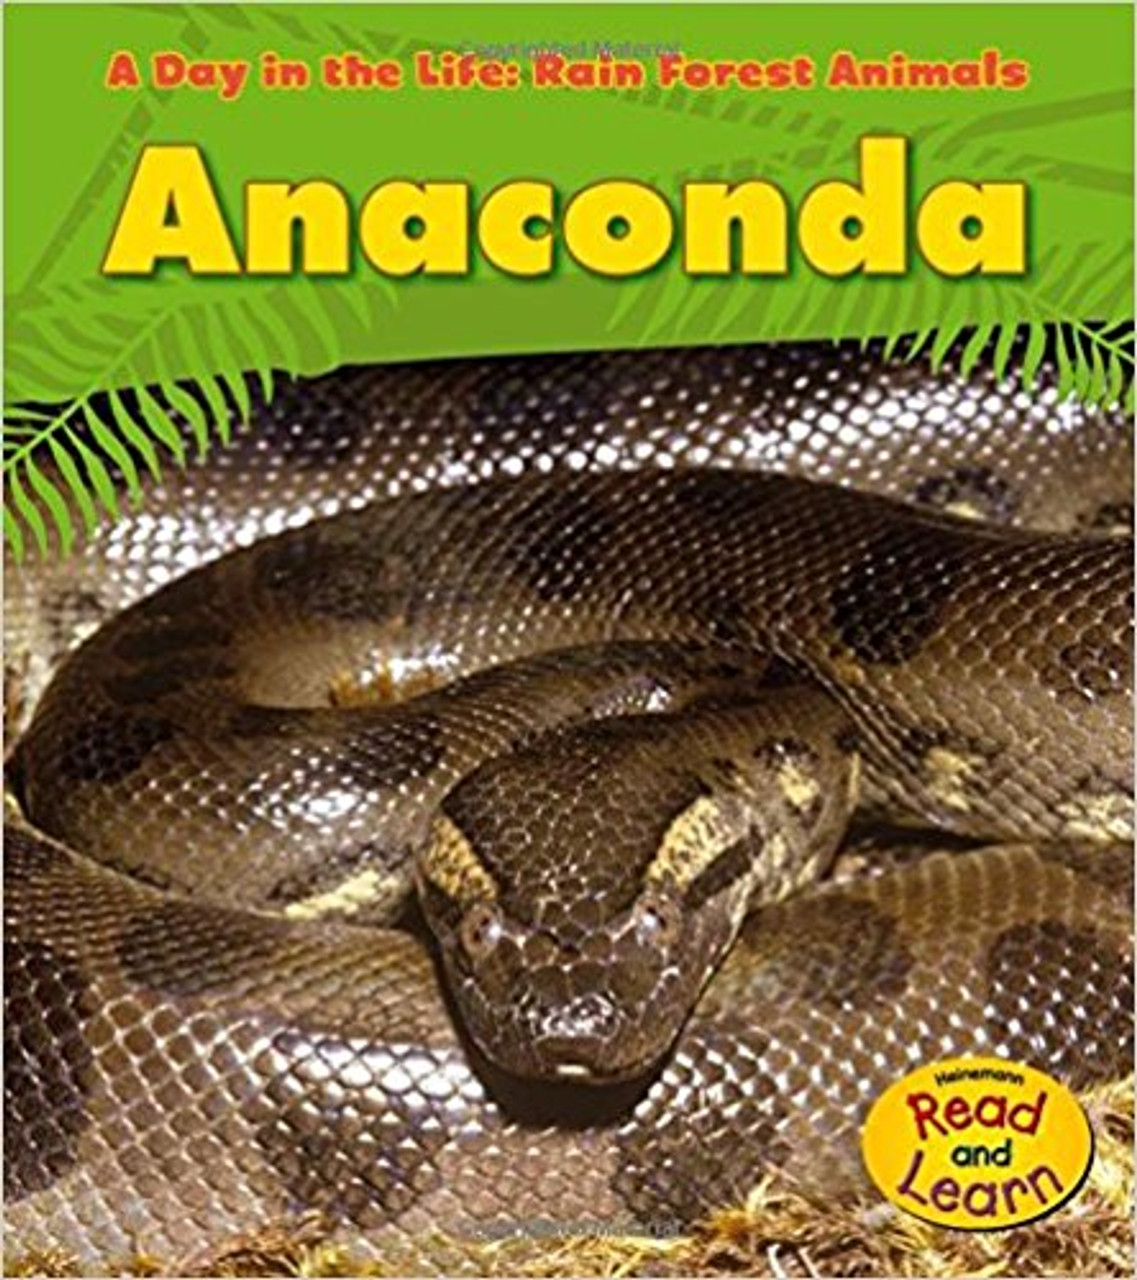 Anaconda by Anita Ganeri